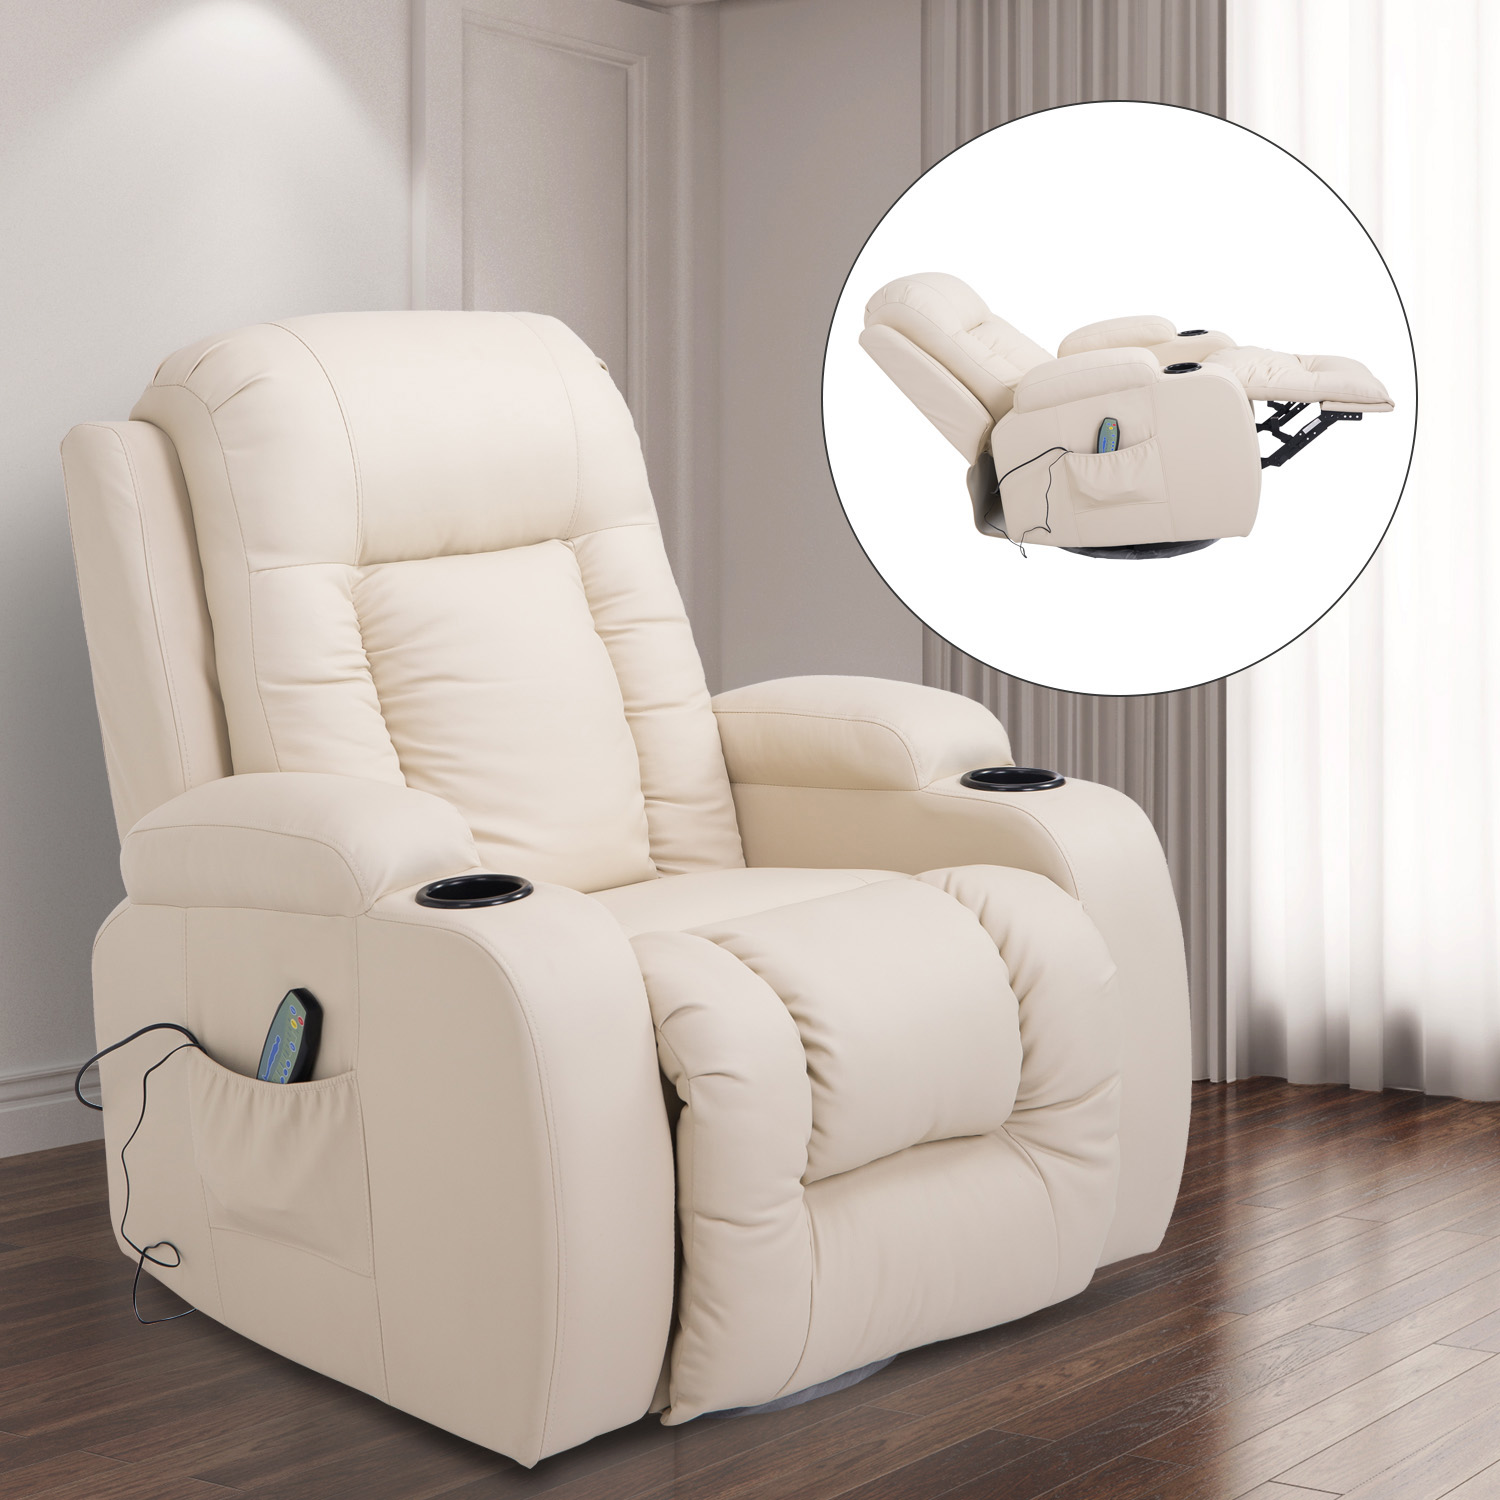 HOMCOM Massage Recliner Chair Heated Vibrating PU Leather Ergonomic Lounge 360 Degree Swivel with Remote - Cream White - image 2 of 8